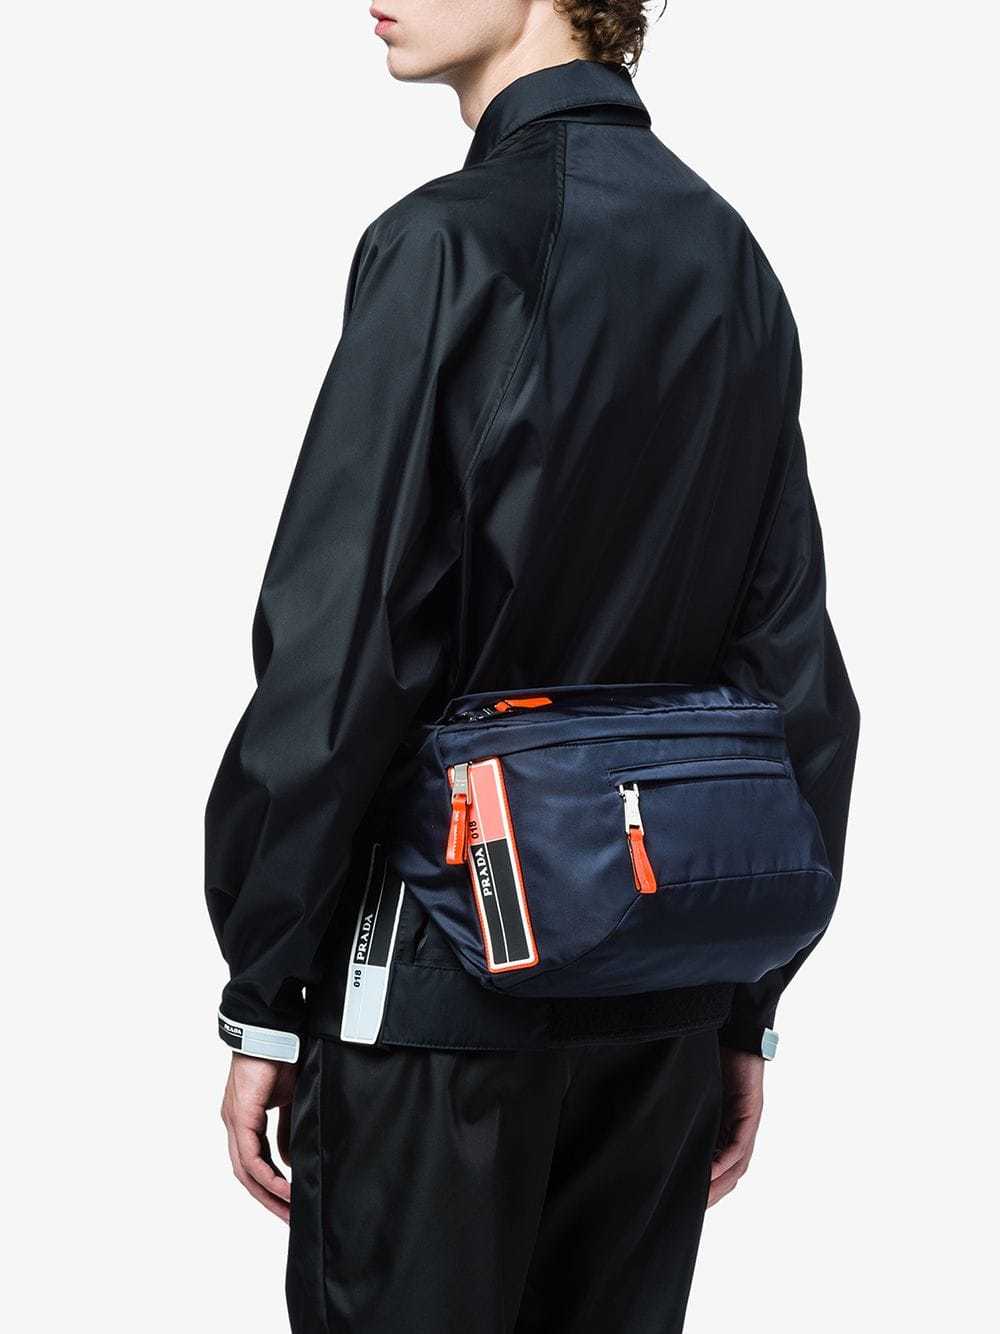 Prada Technical Fabric Belt Bag, $1,020  | Lookastic